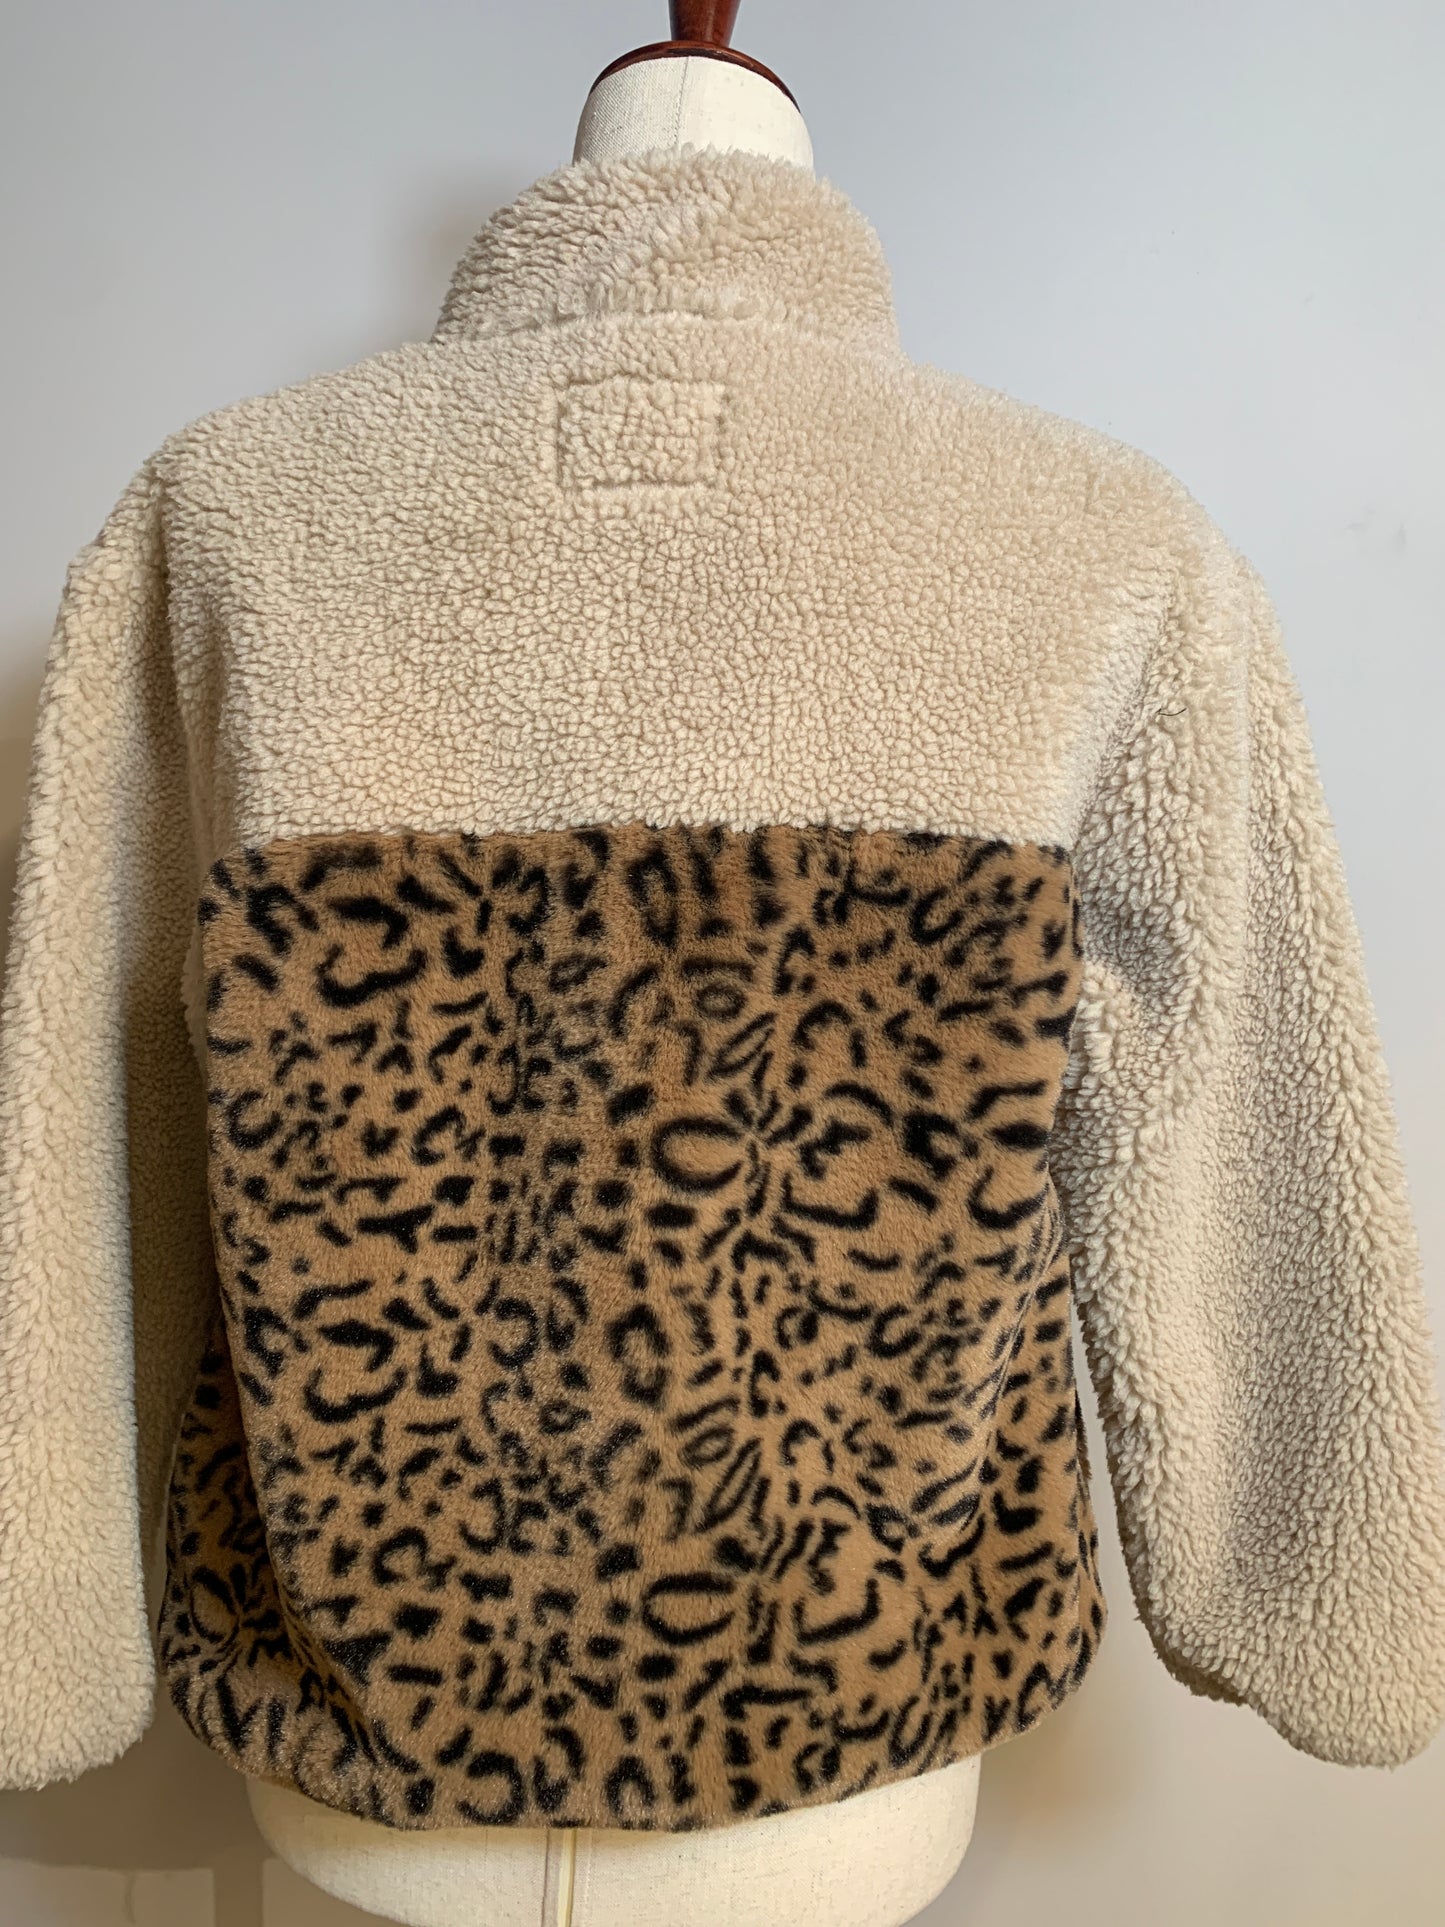 Rails "Teddy" Fleece Animal Print Pullover, Sz S